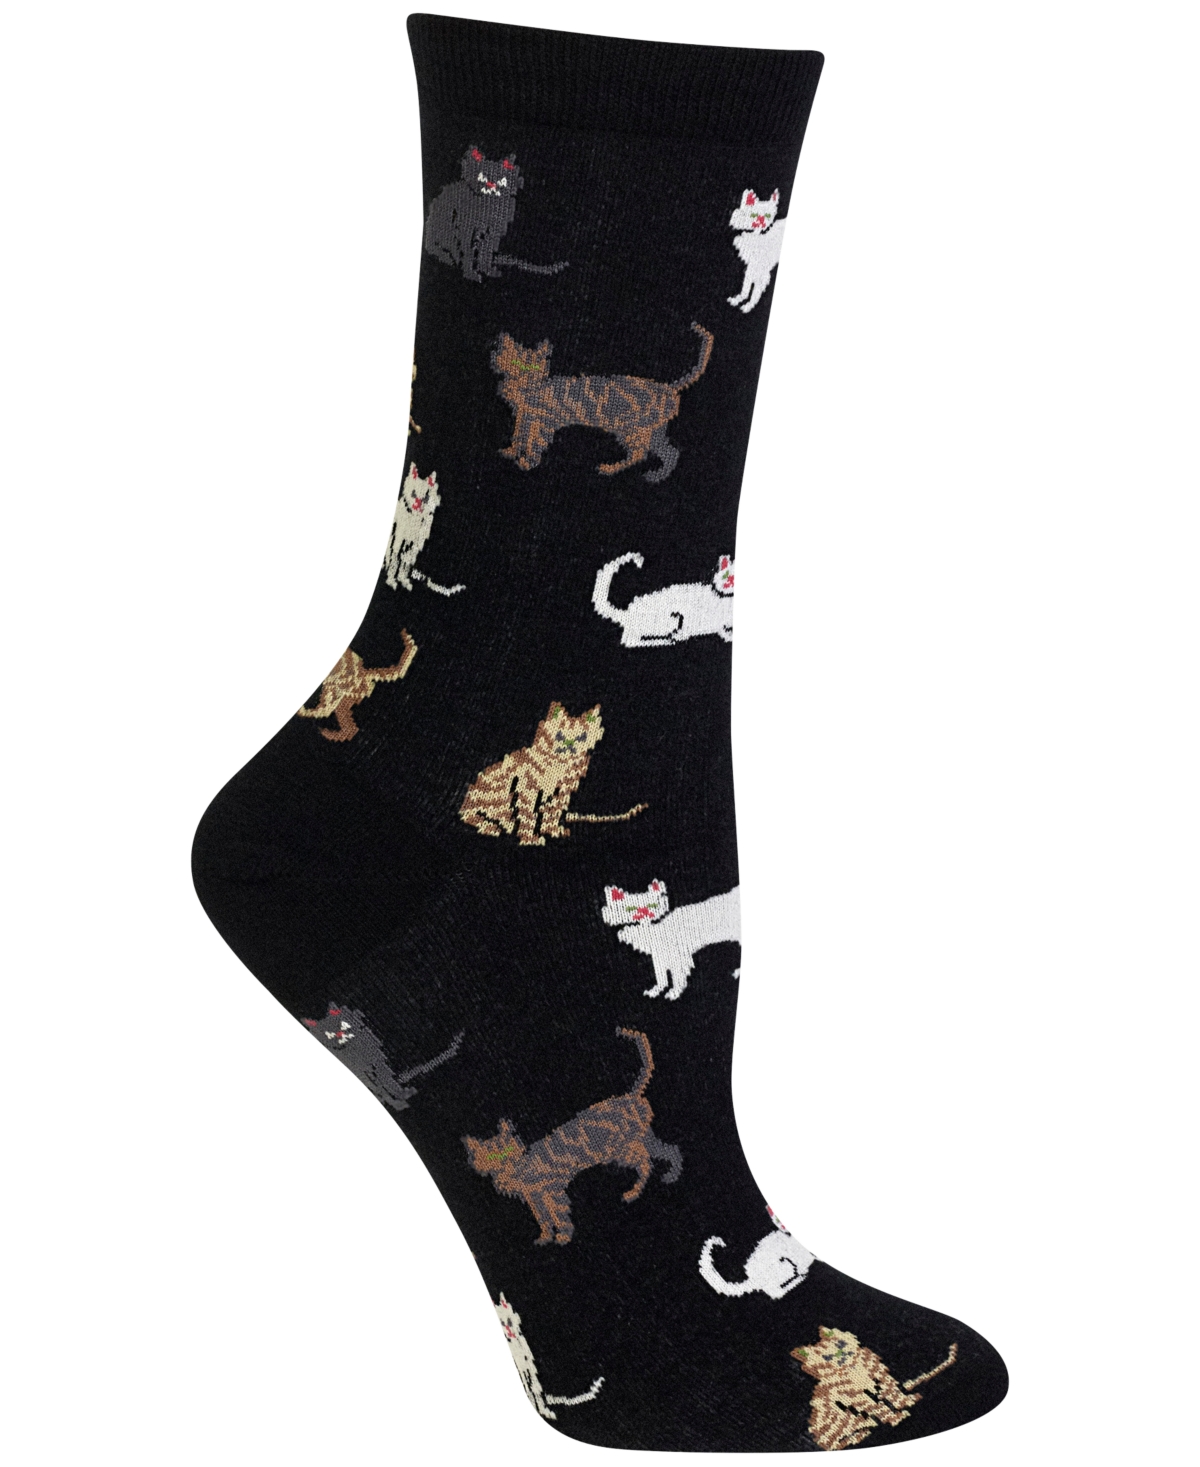 Women's Cats Fashion Crew Socks - Hemp